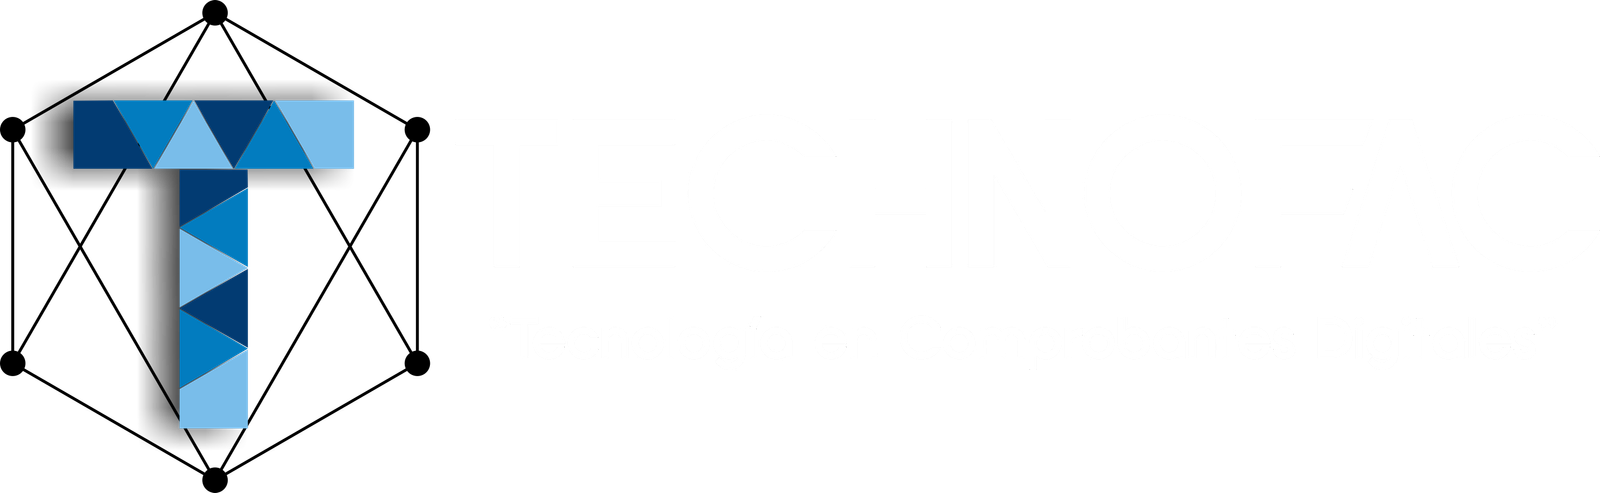 Technofac